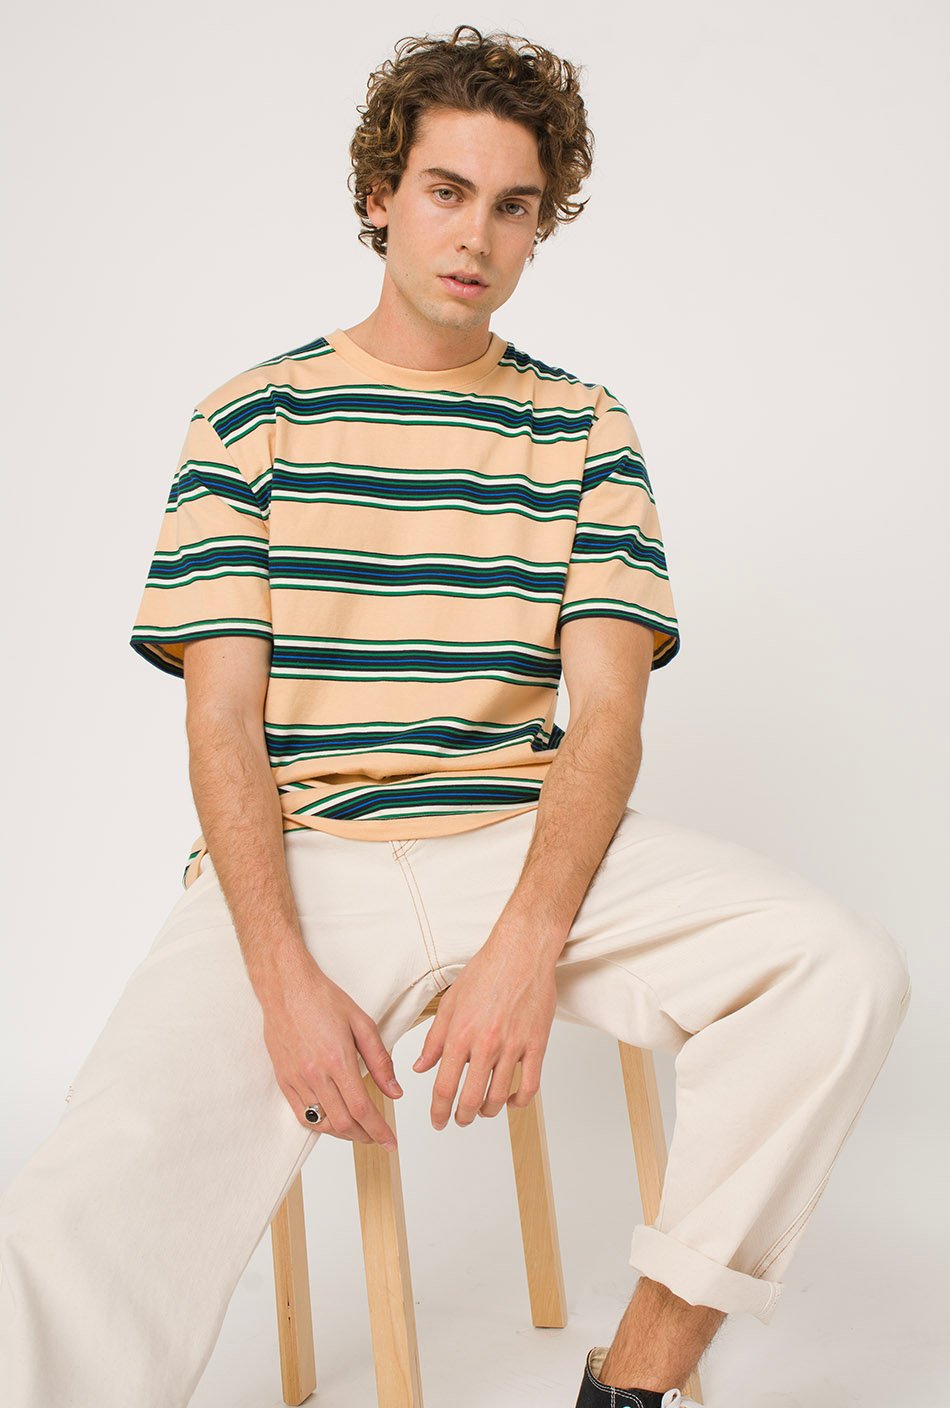 Dickies Lithia Springs Striped T-Shirt